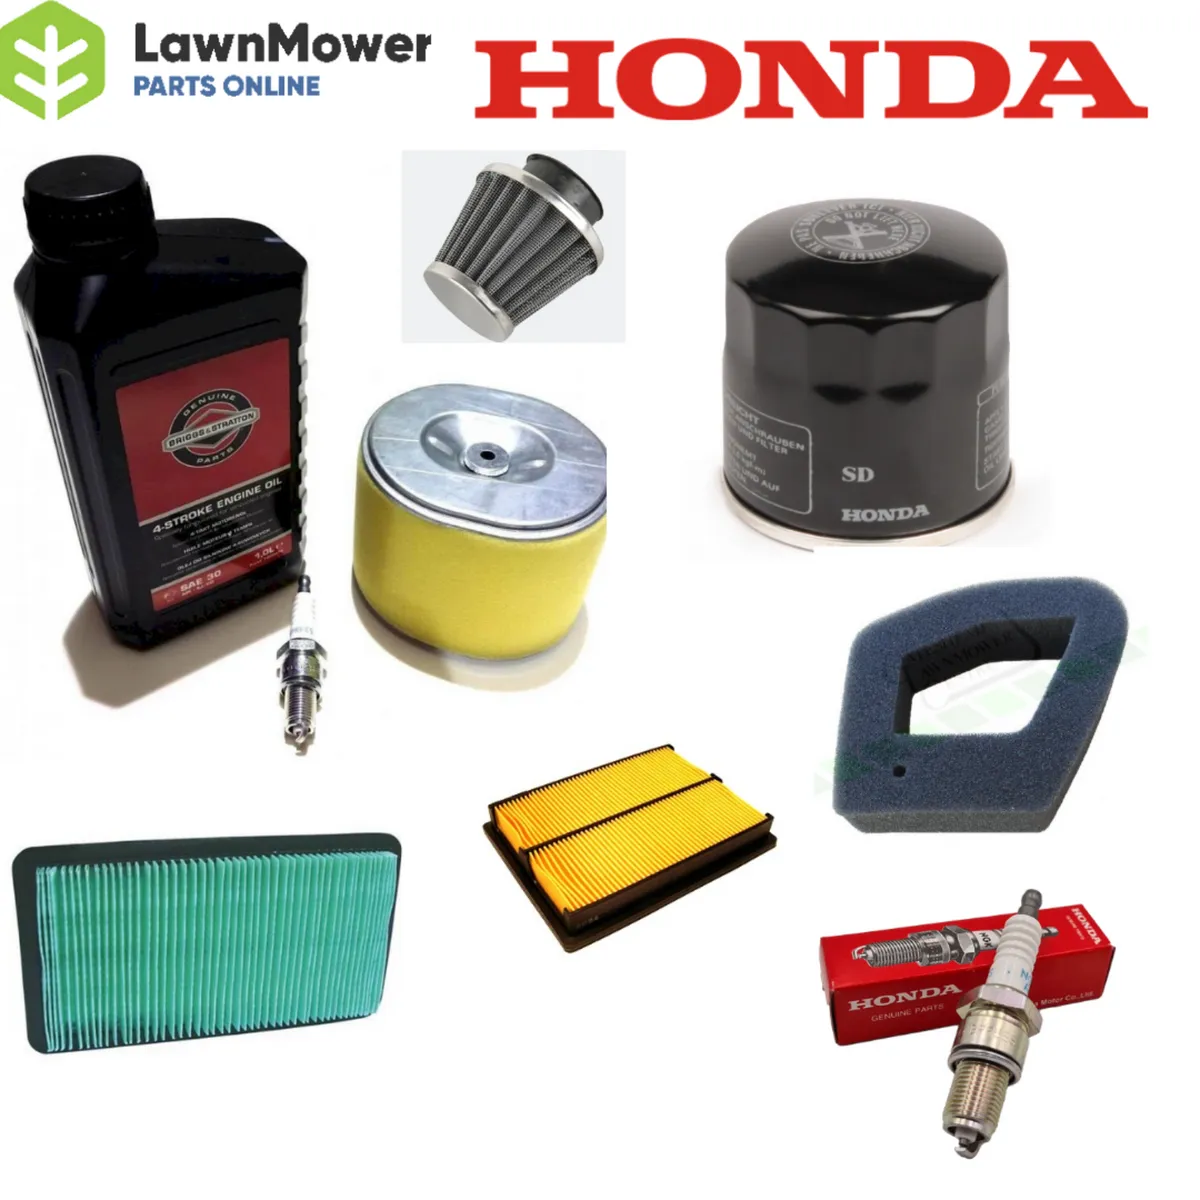 Honda Service Kits for Honda Mowers-FREE DELIVERY